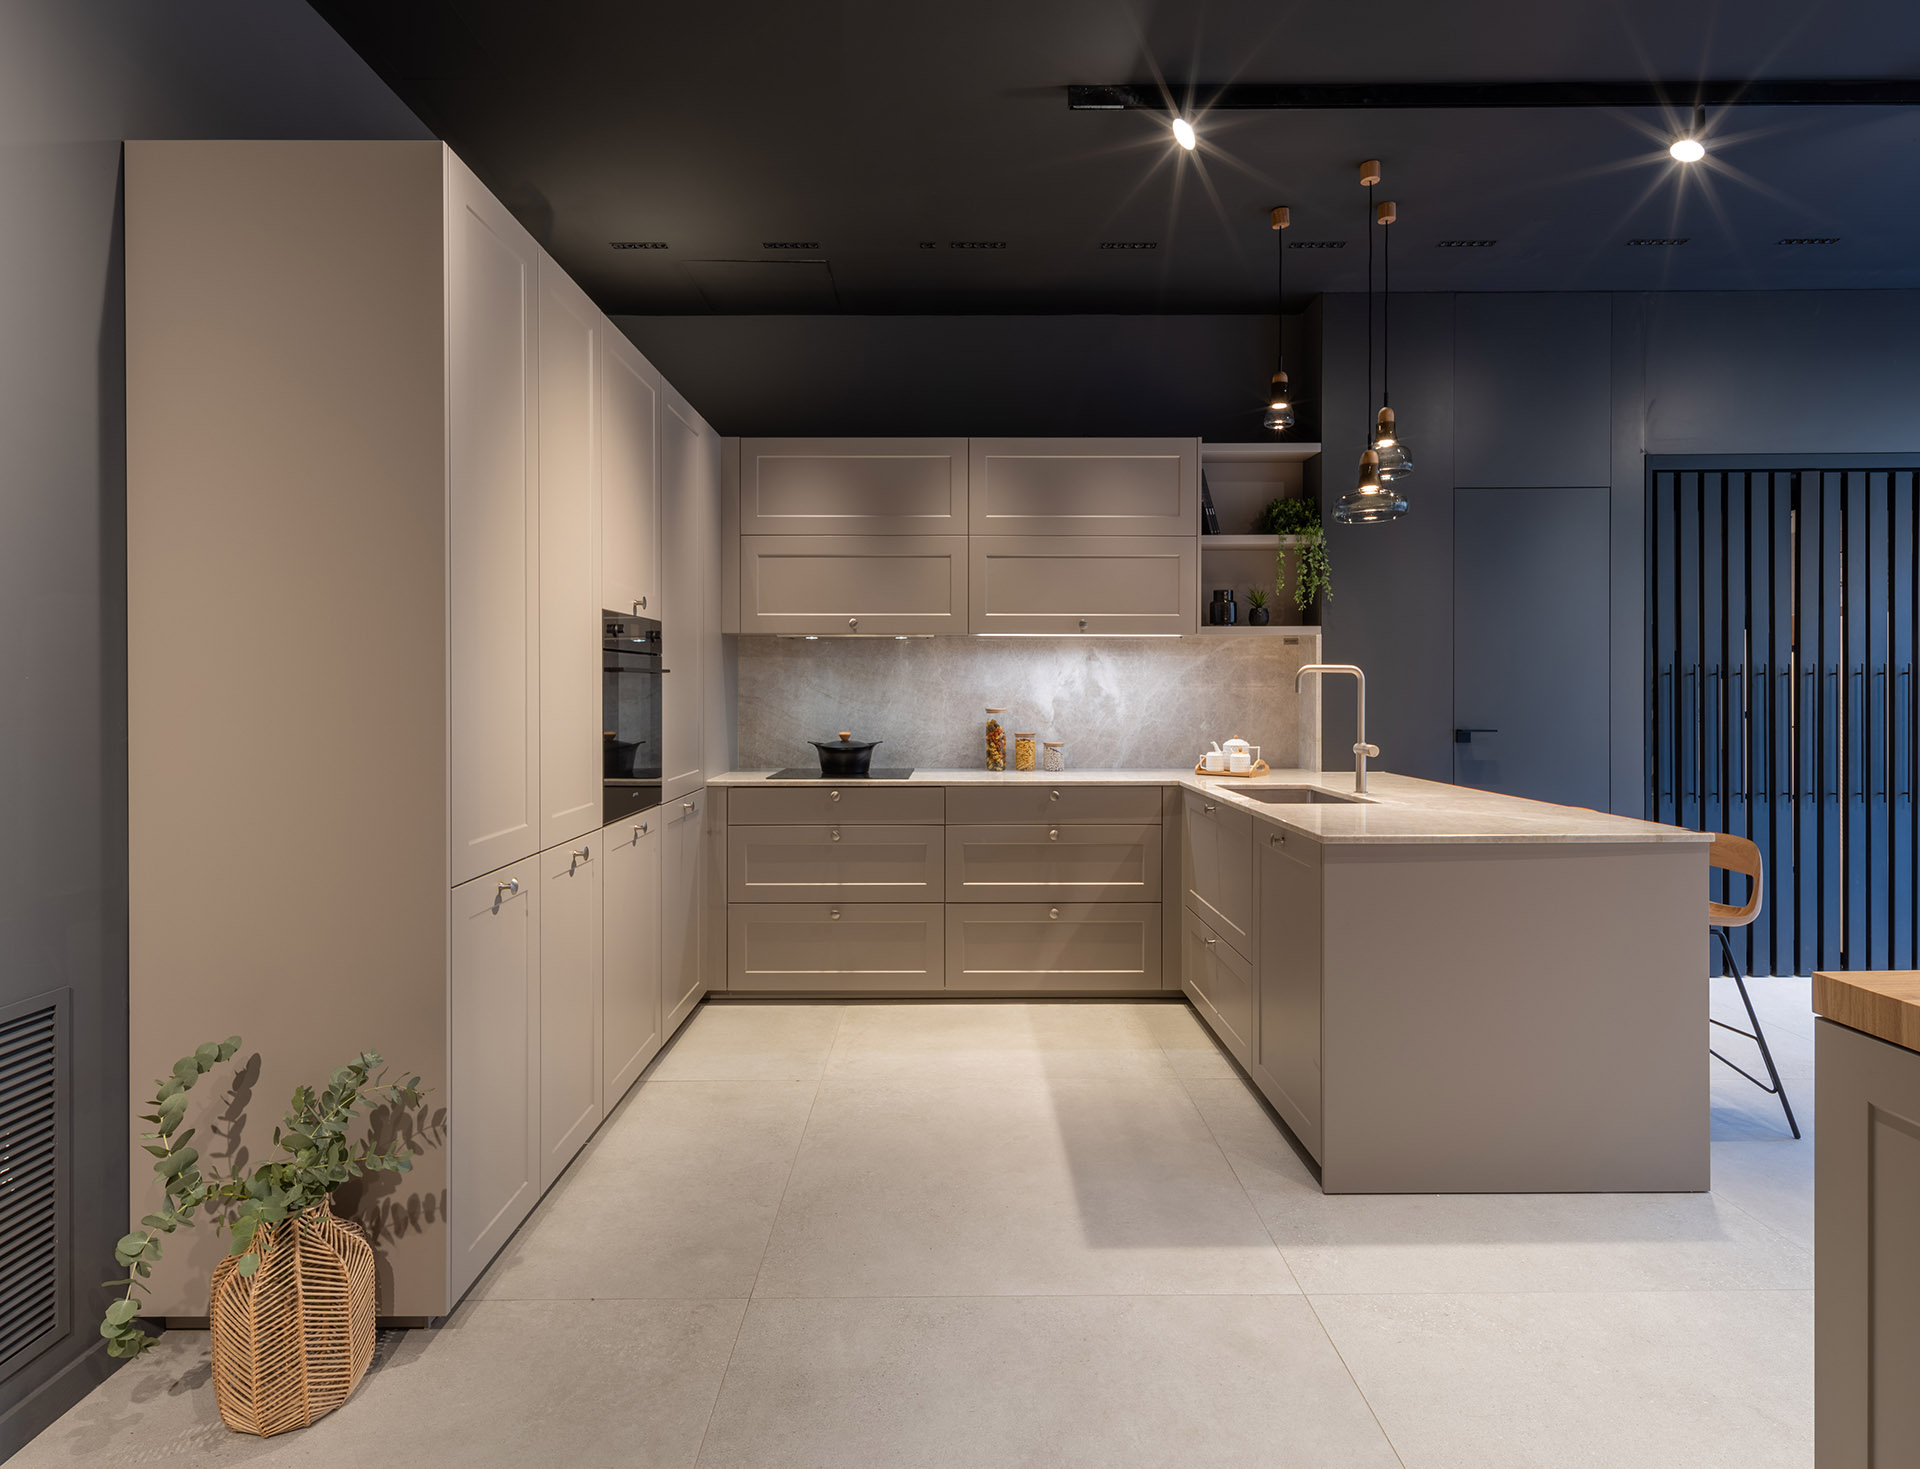 Grey Santos kitchen with peninsula in kitchen showroom in Valencia